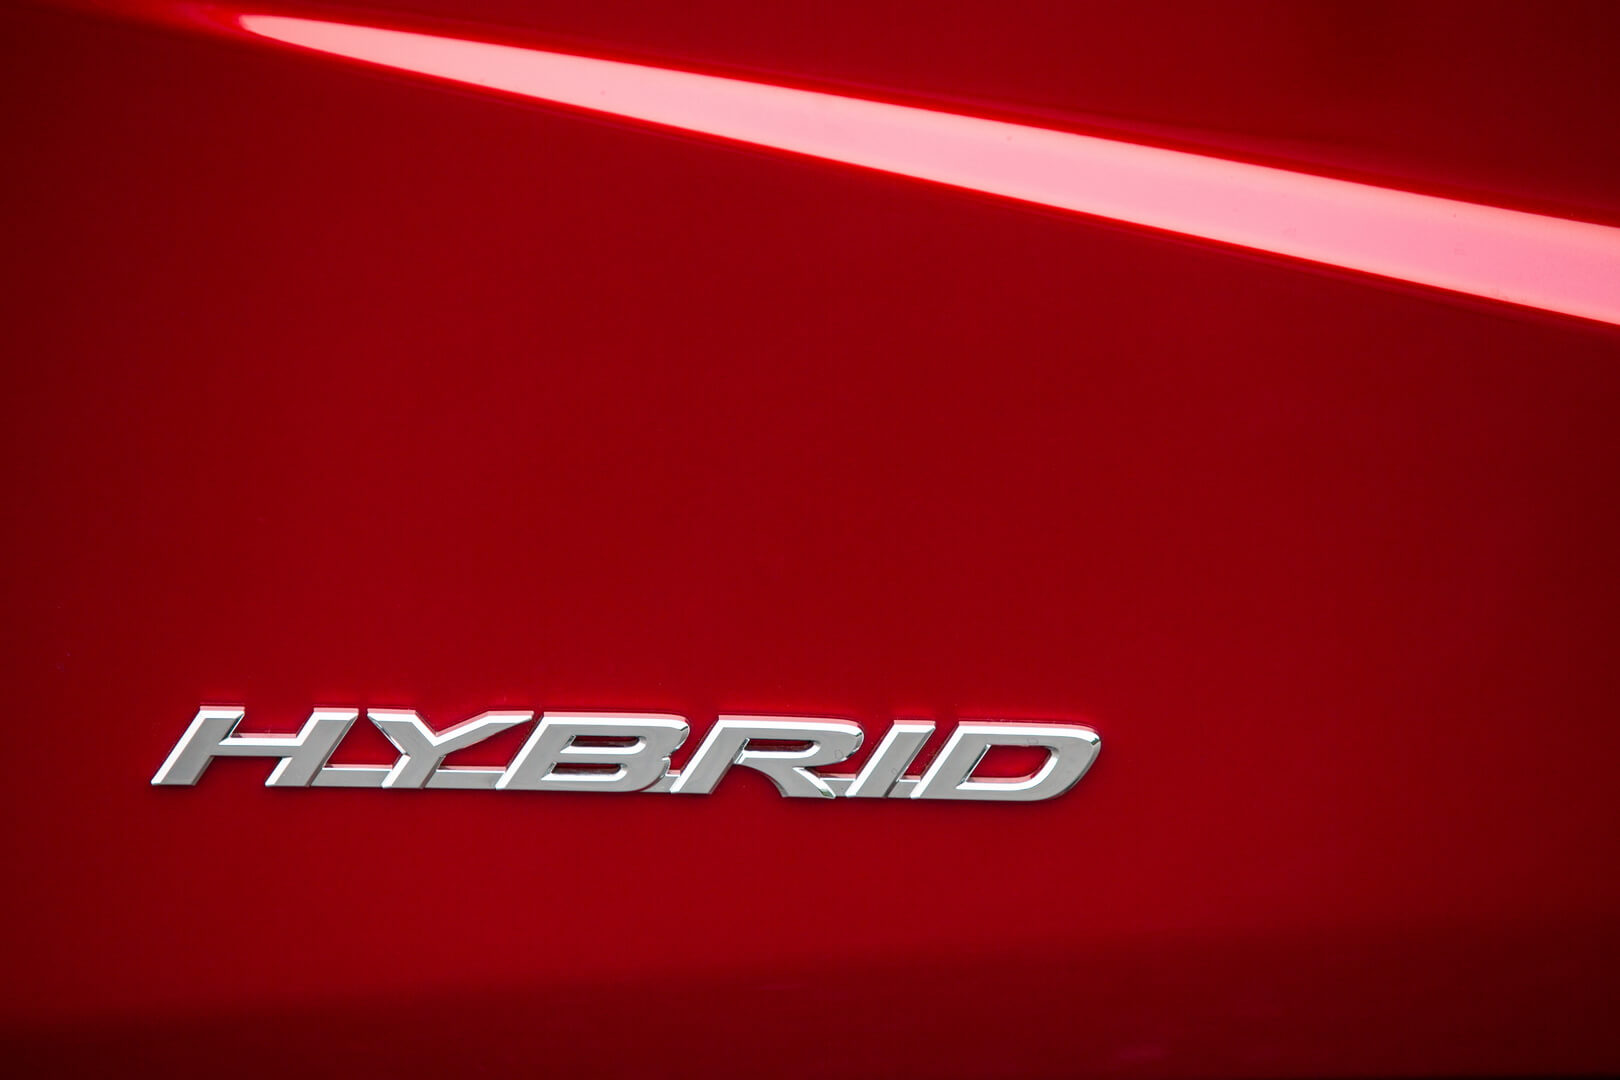 Фотография экоавто Lexus RX 450h Hybrid - фото 15